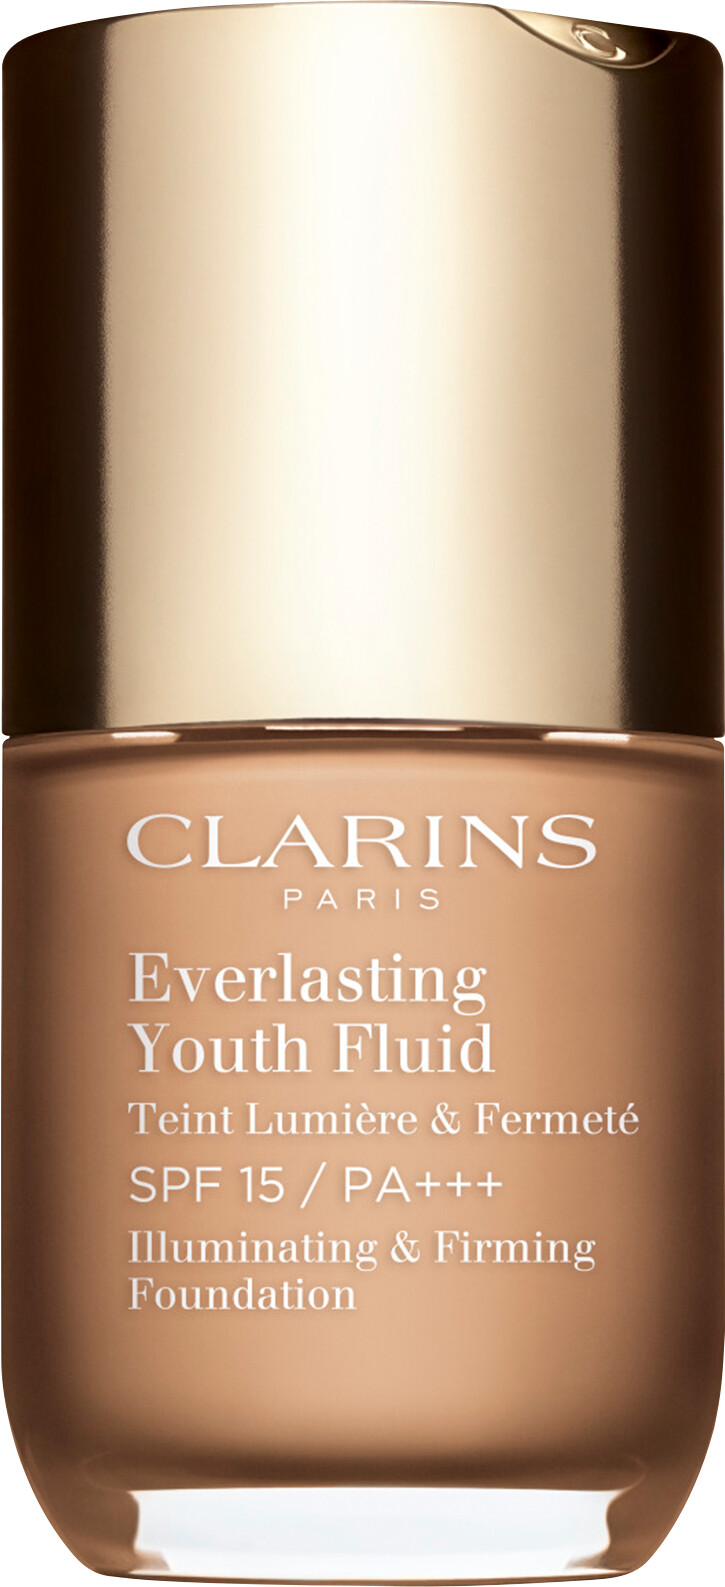 Clarins Everlasting Youth Fluid Illuminating and Firming Foundation SPF15 30ml 110 - Honey